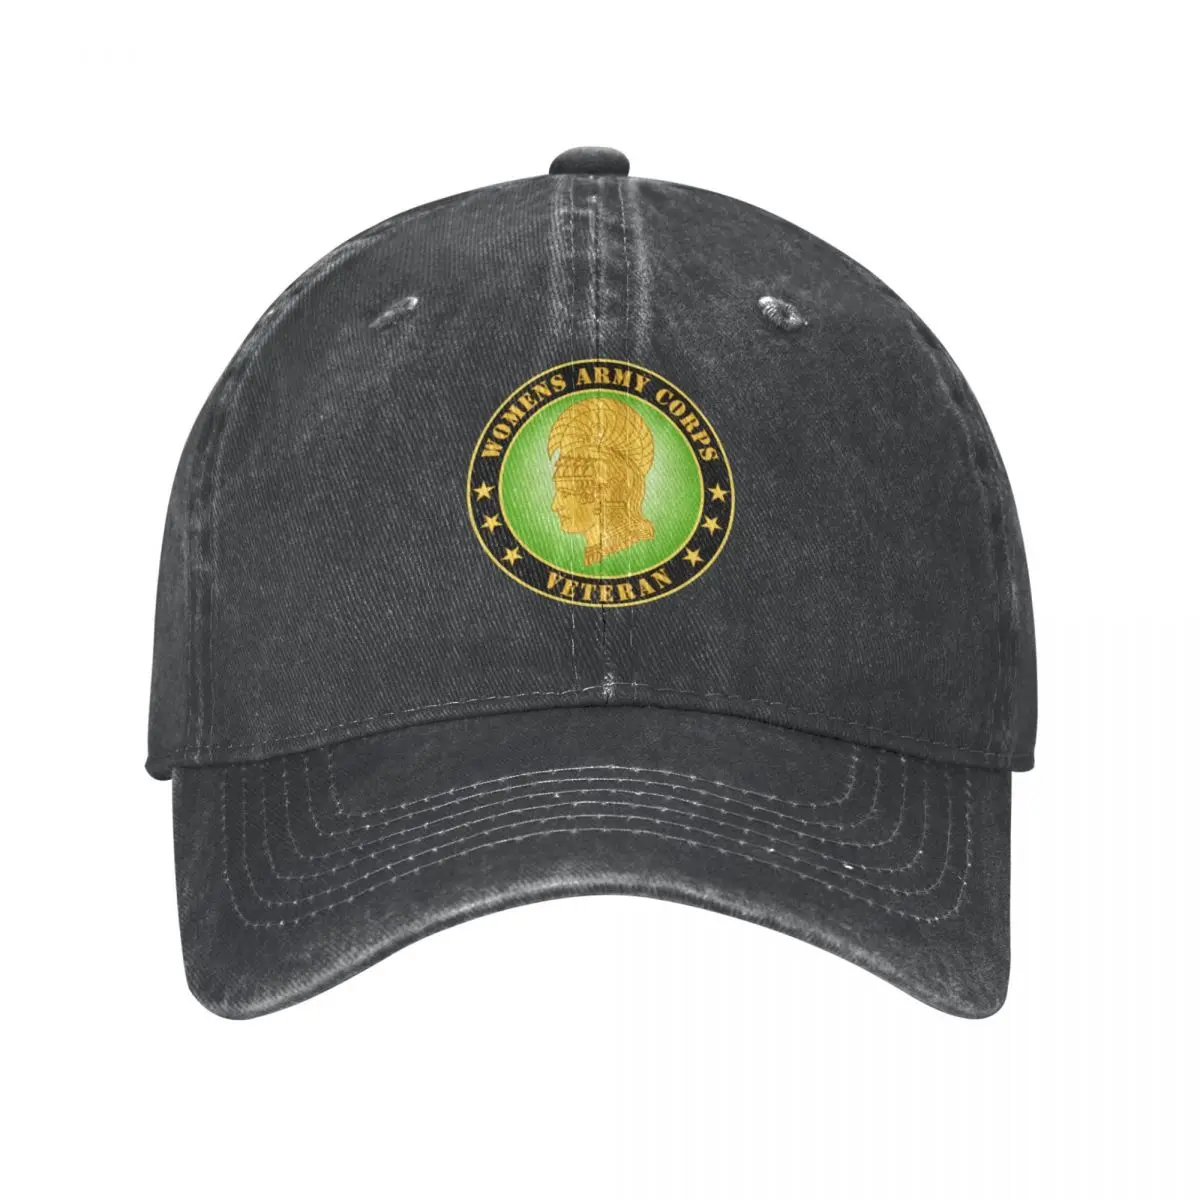 

Шляпа от солнца для мужчин и женщин, армейская ветерина, стиль регби, защита от УФ-лучей, кепка на заказ